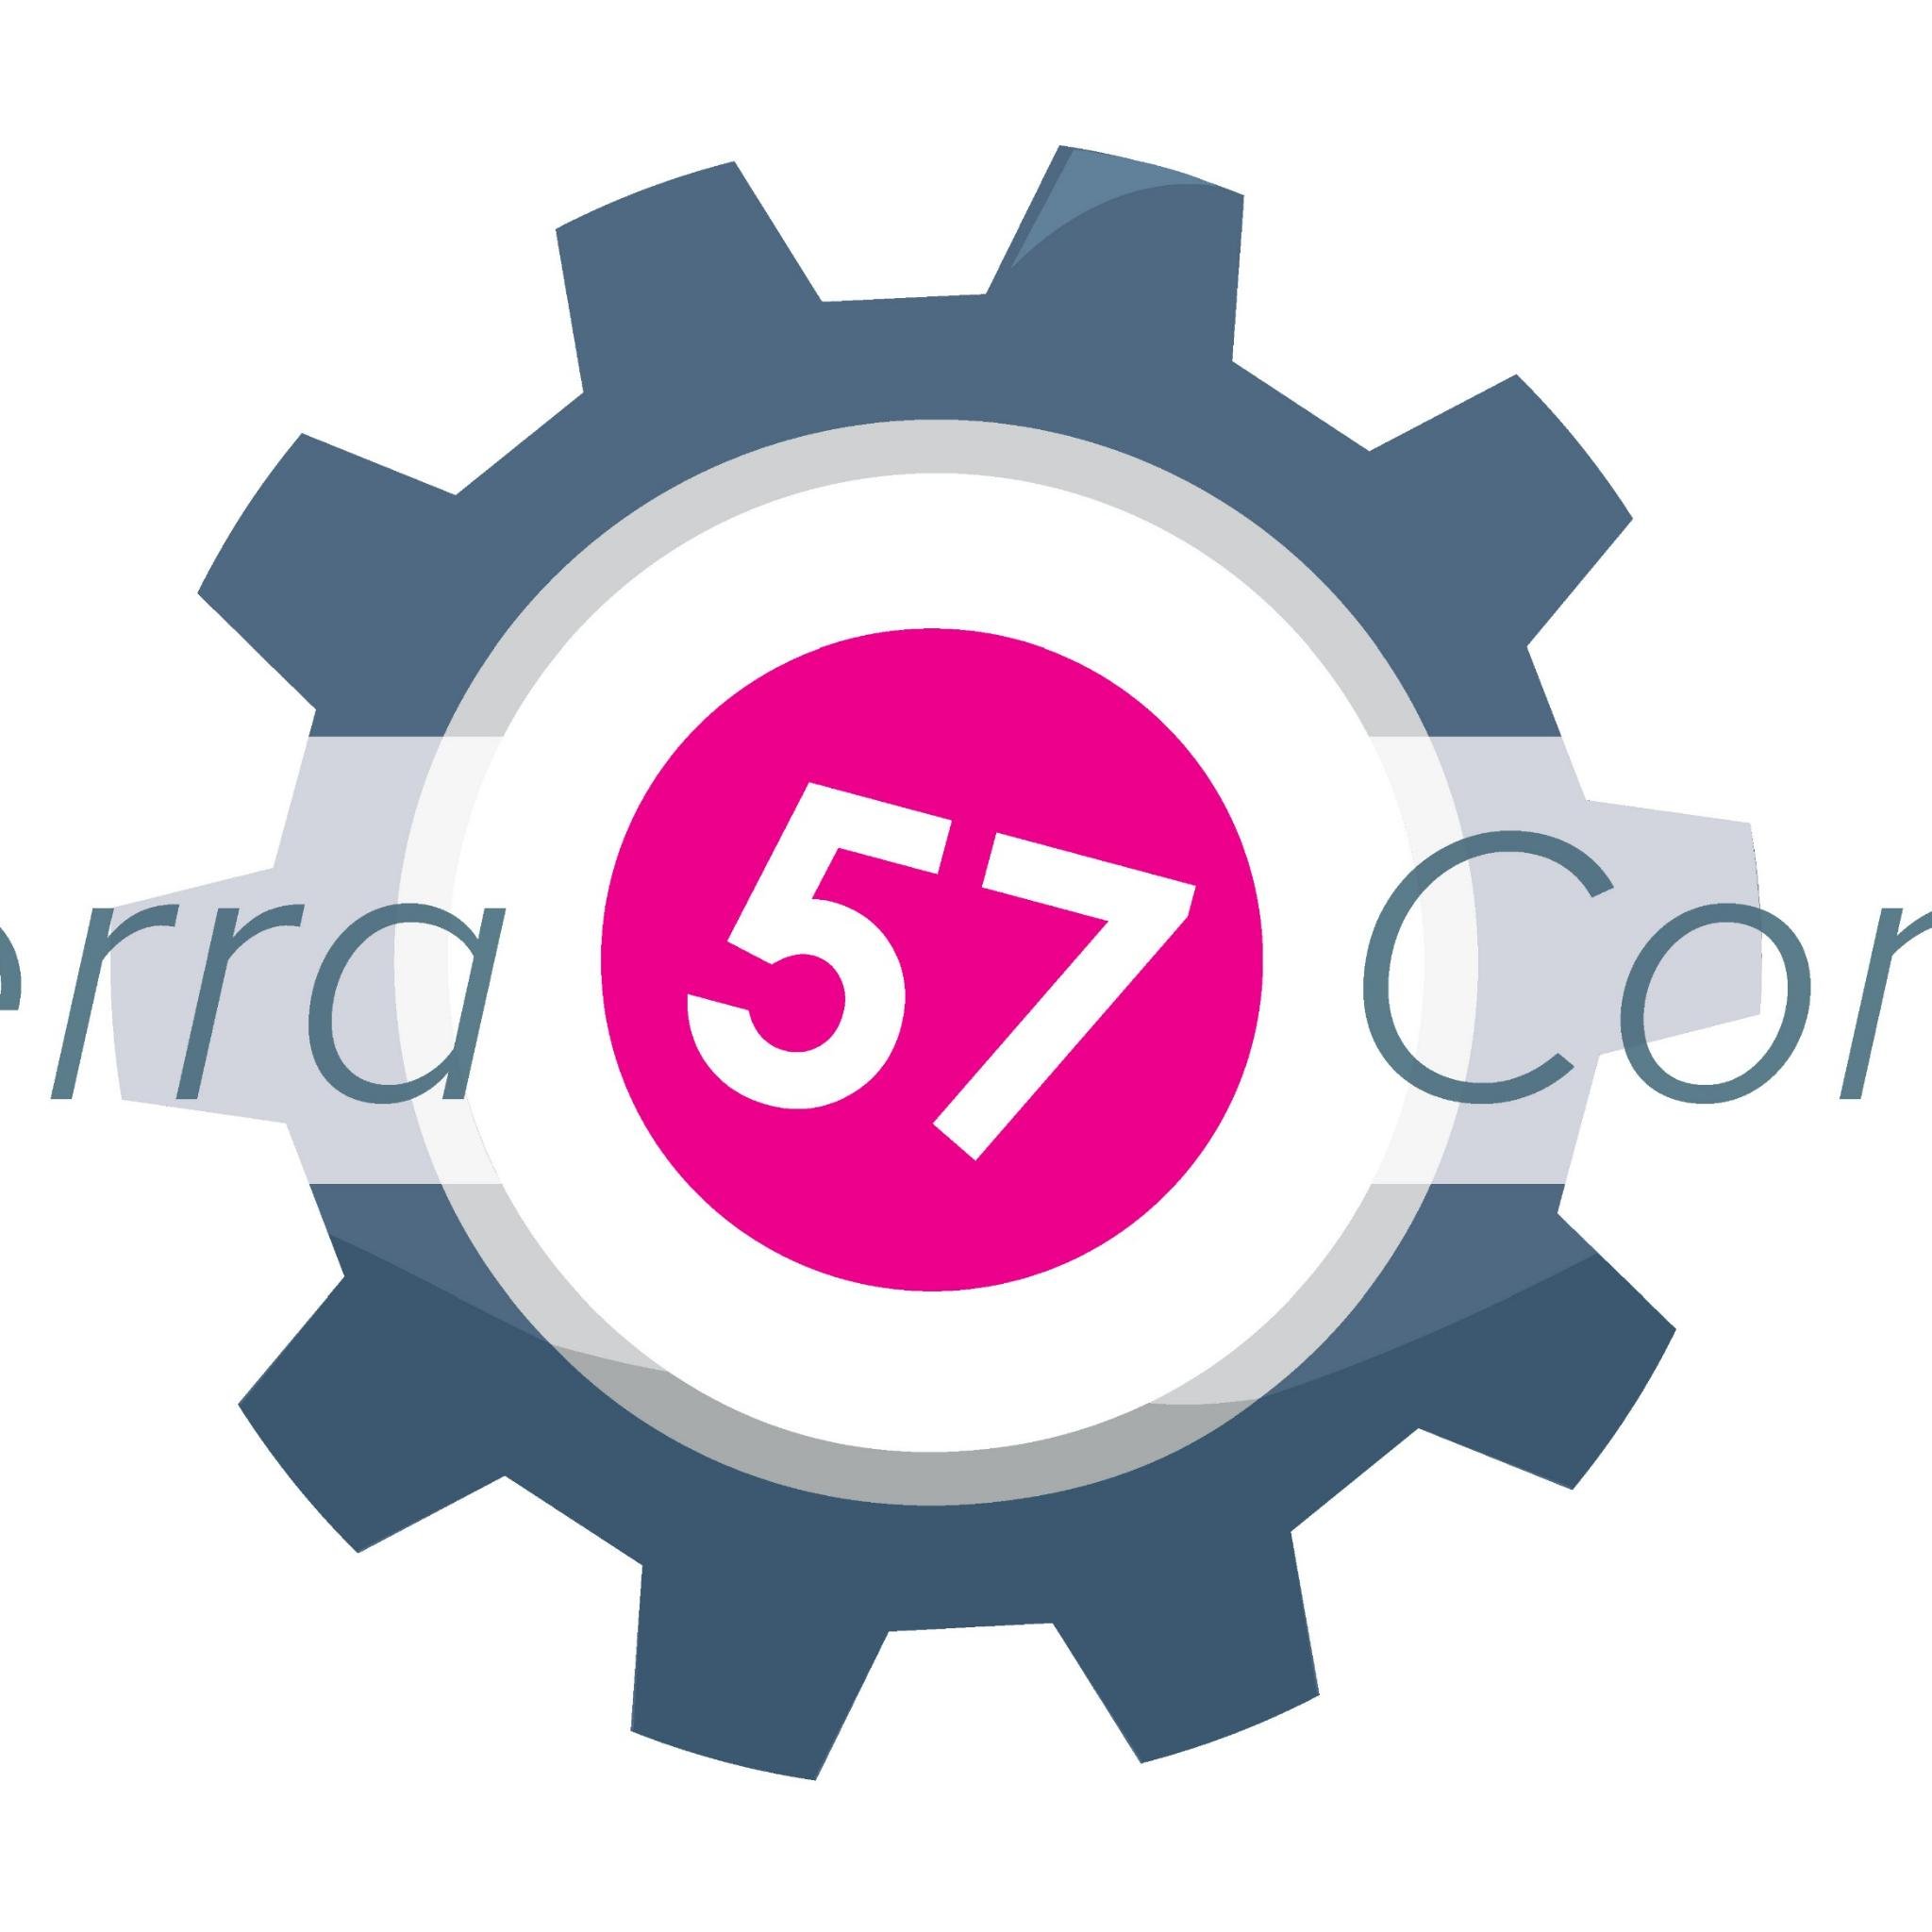 Sierra 57 Consult Ltd